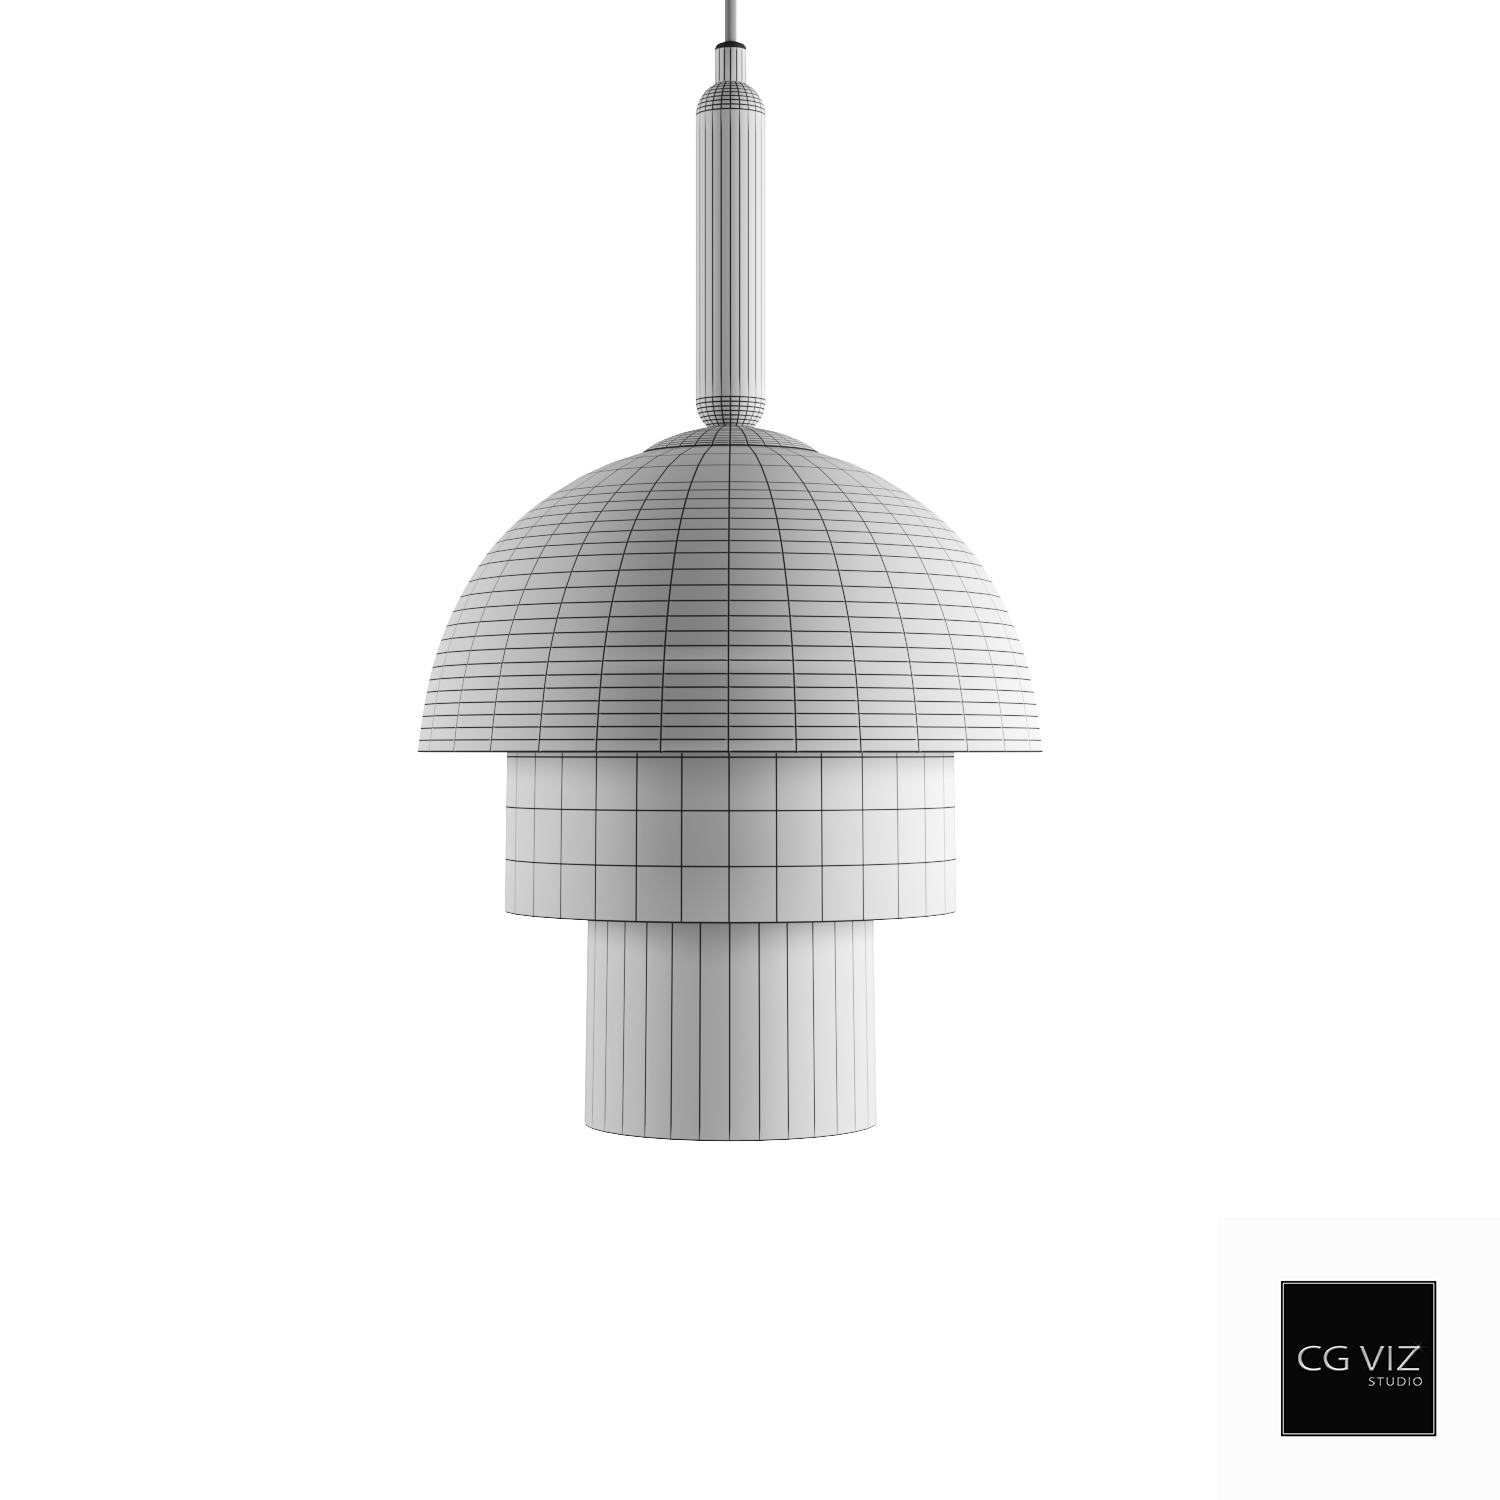 Wireframe View of Lamptron Jolly Lamp 3D Model by CG Viz Studio